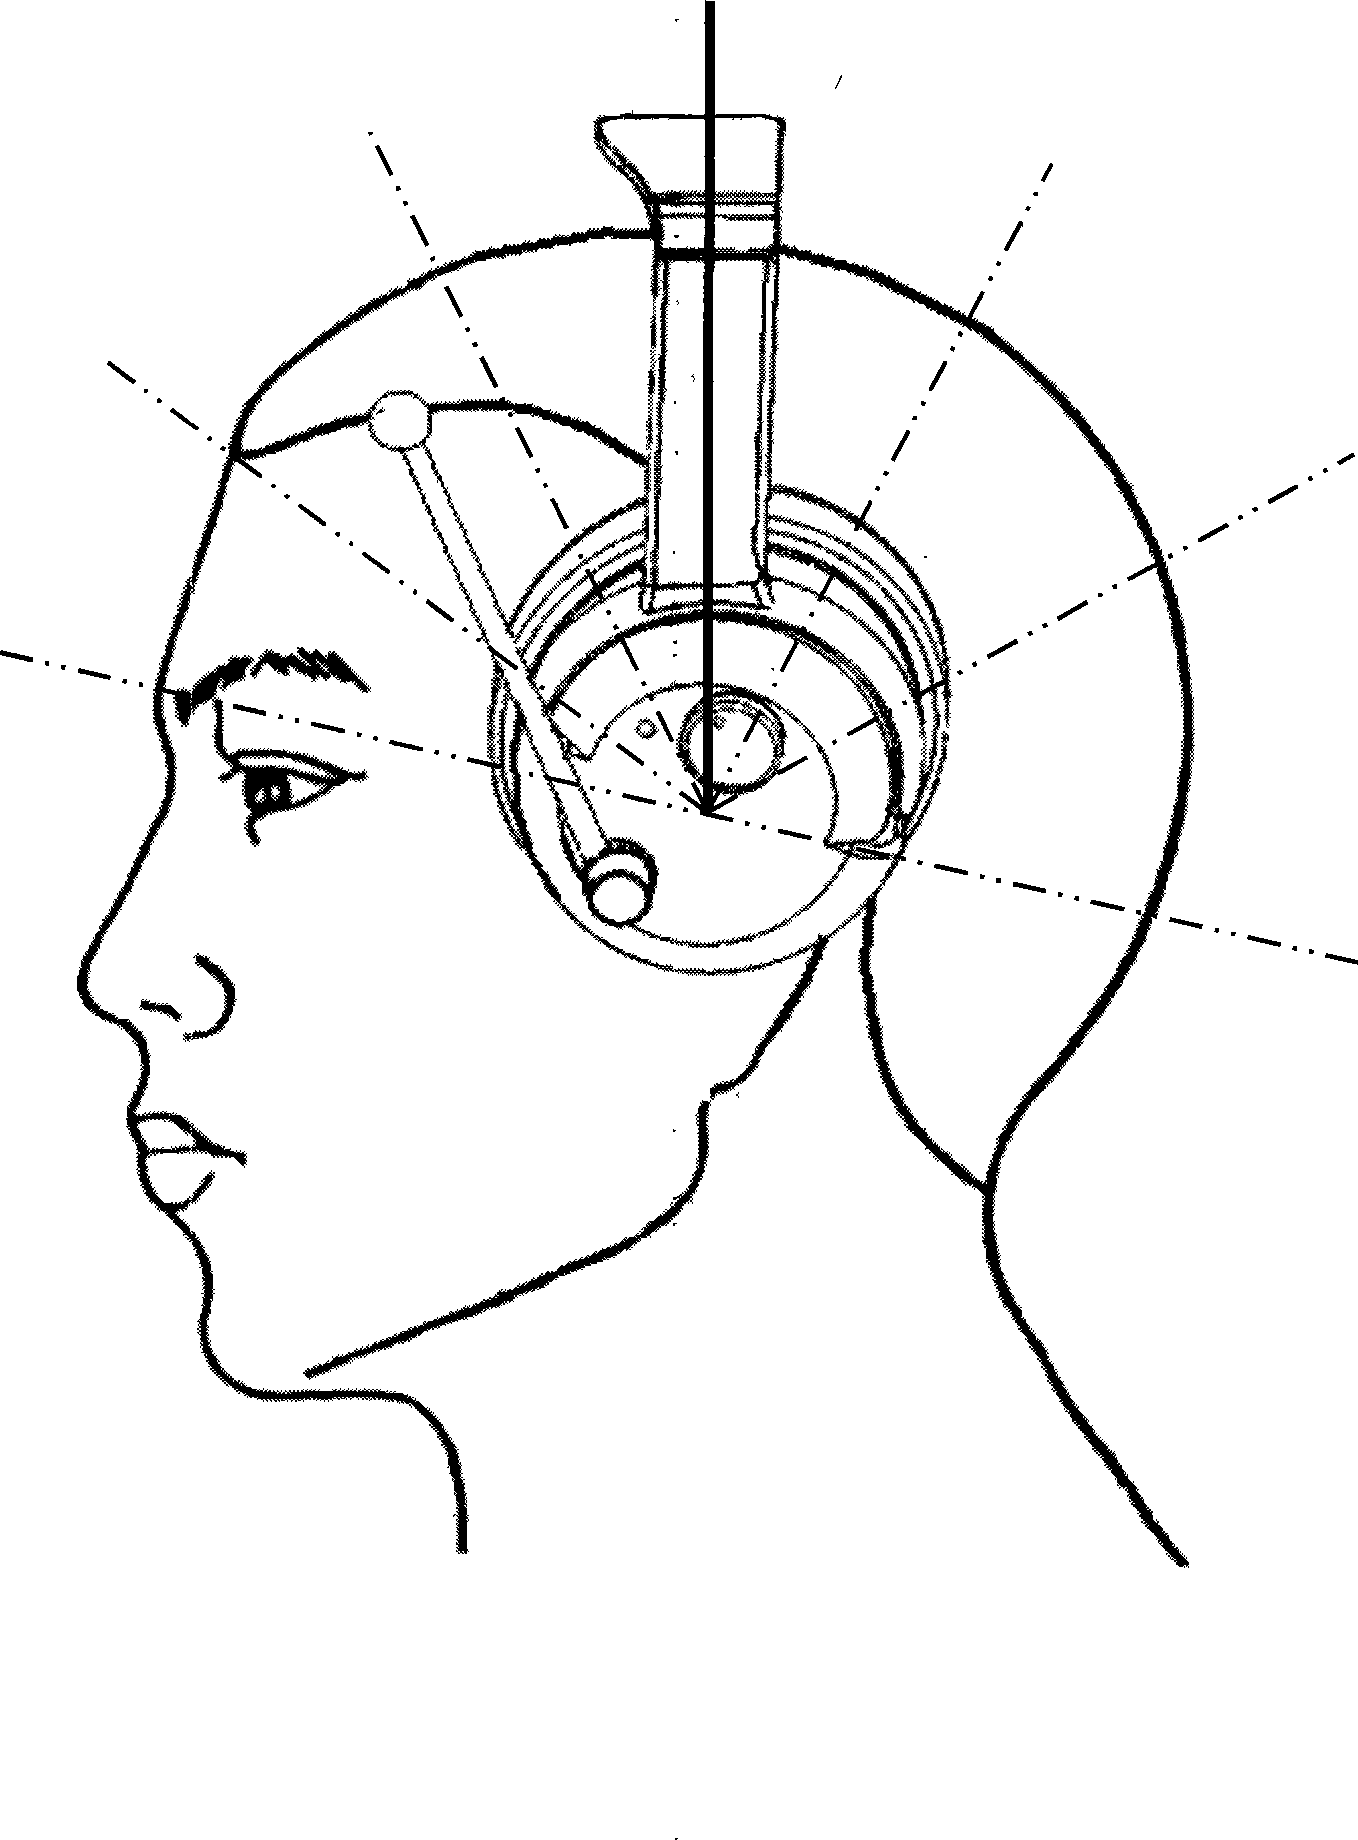 Transcranial magnetoelectric depression therapeutic apparatus